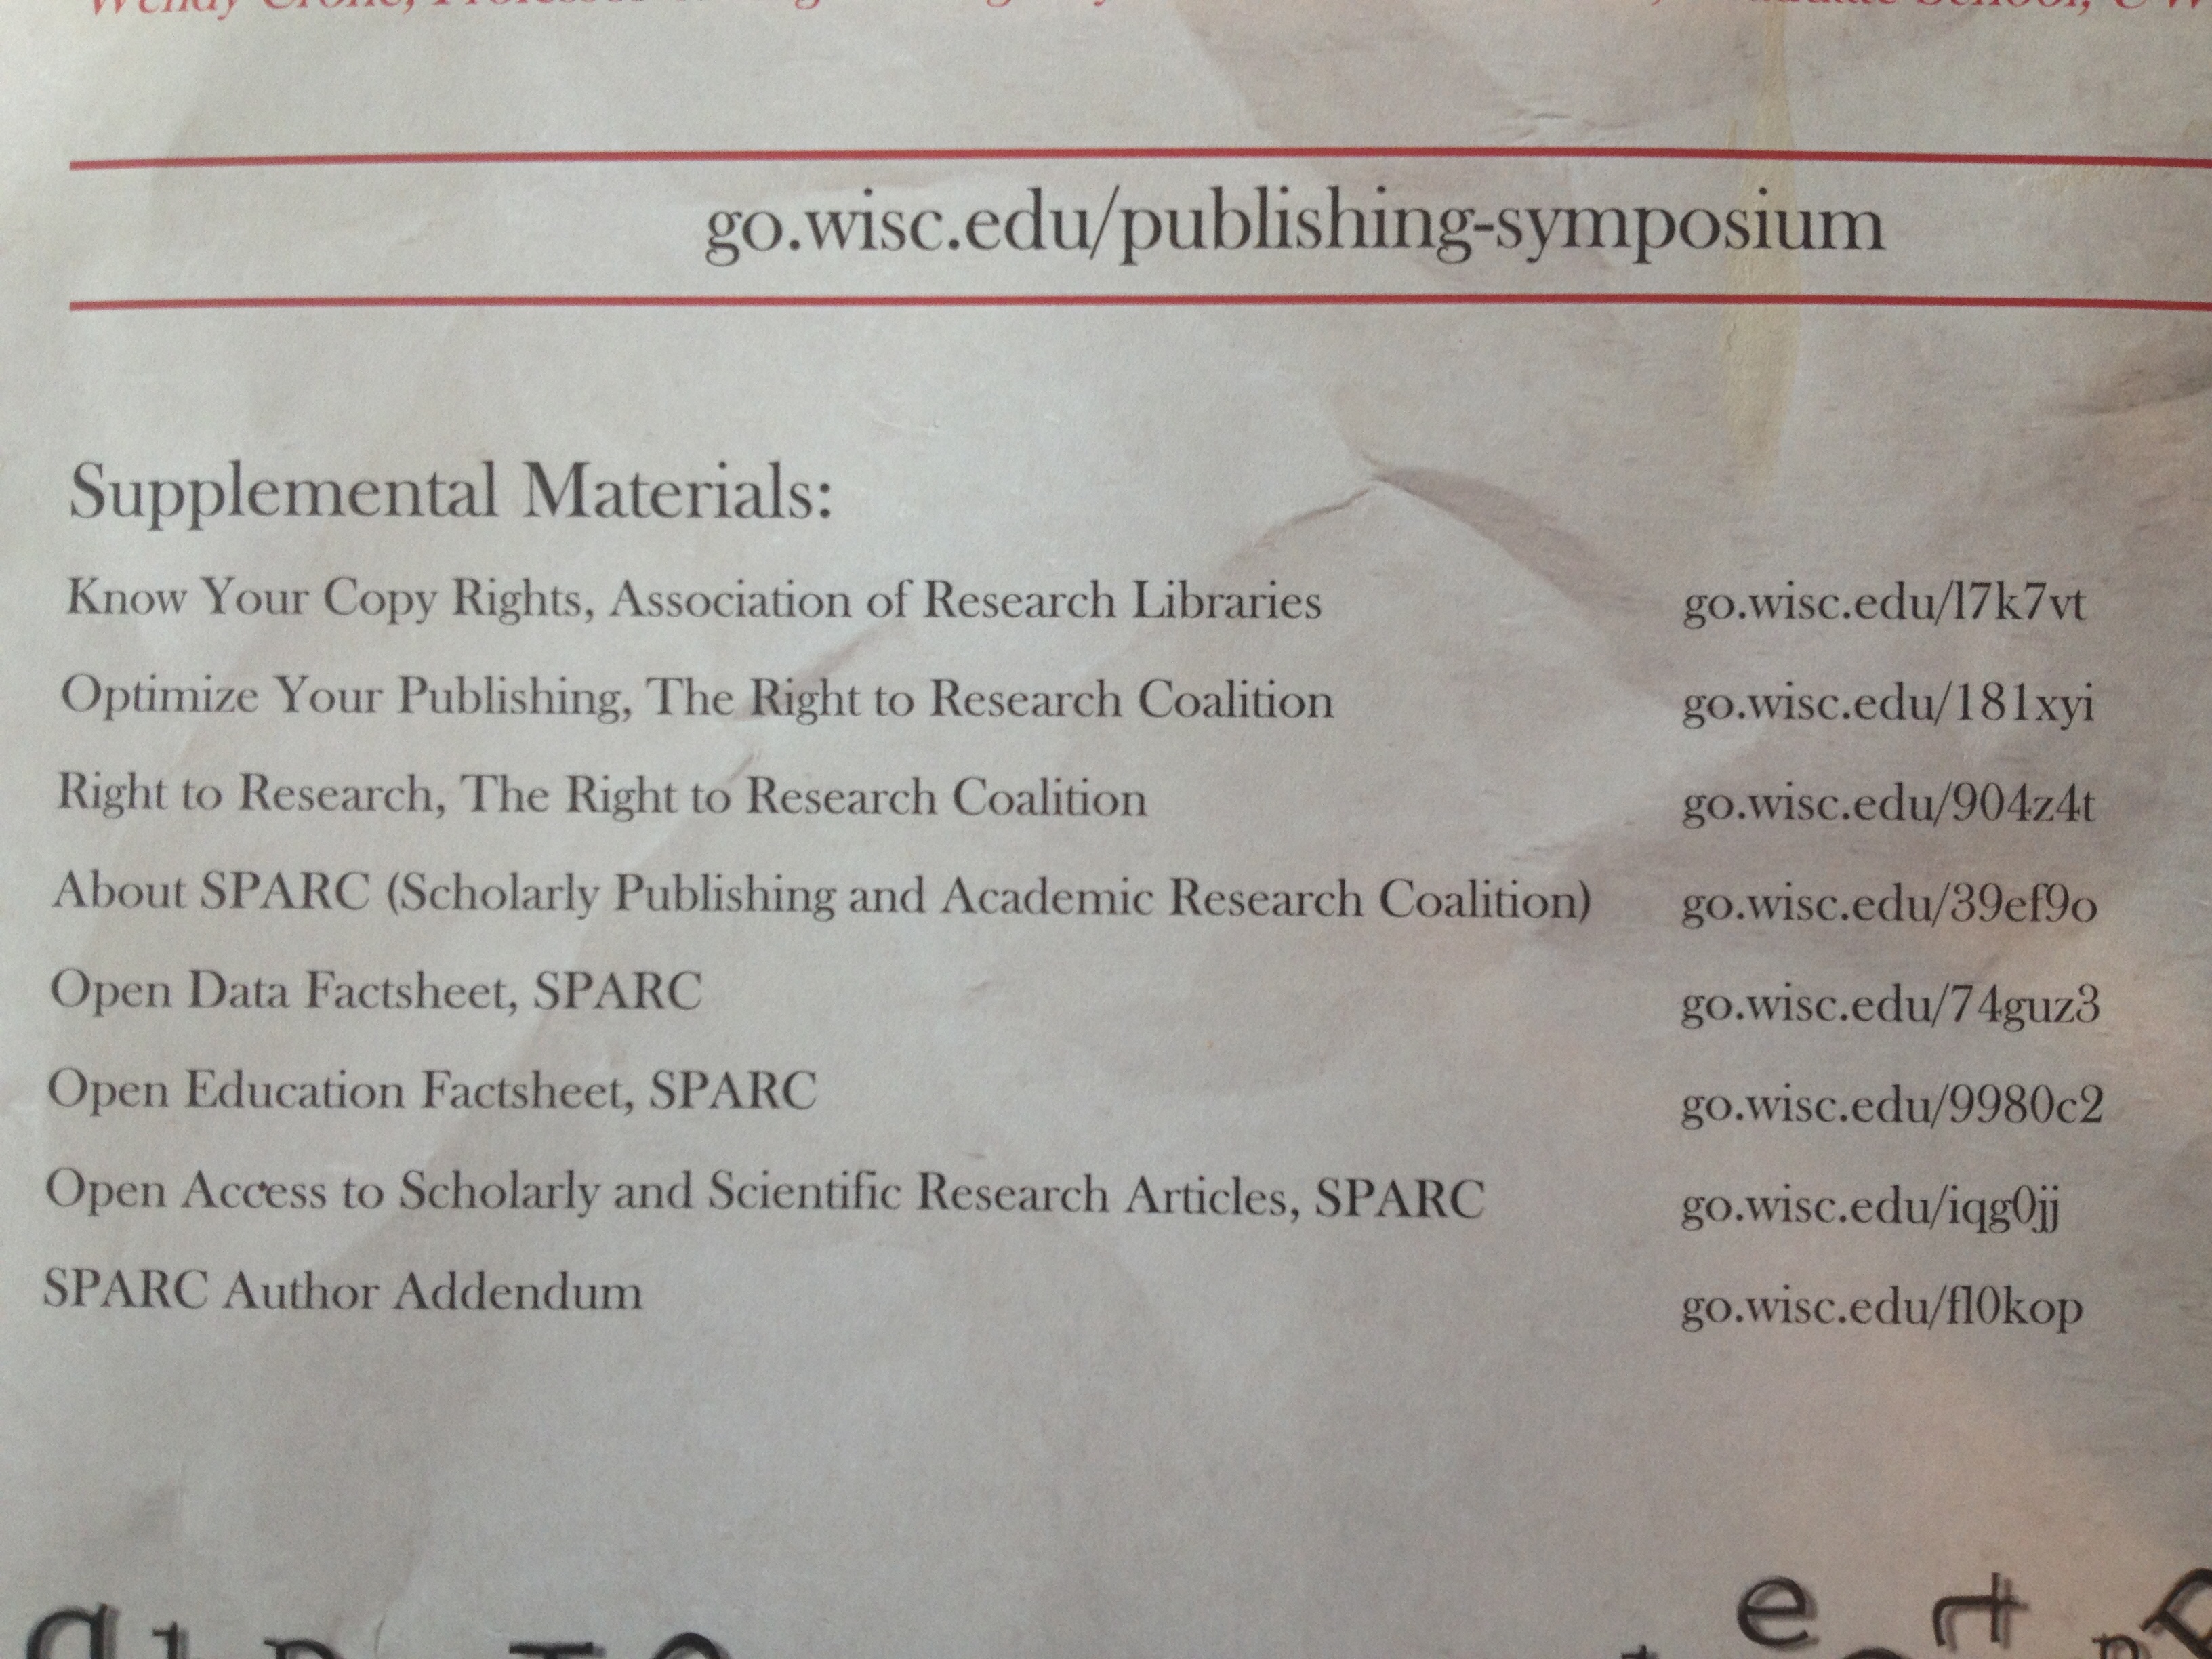 Supplemental materials from UW-Madison Scholarly Publishing Symposium